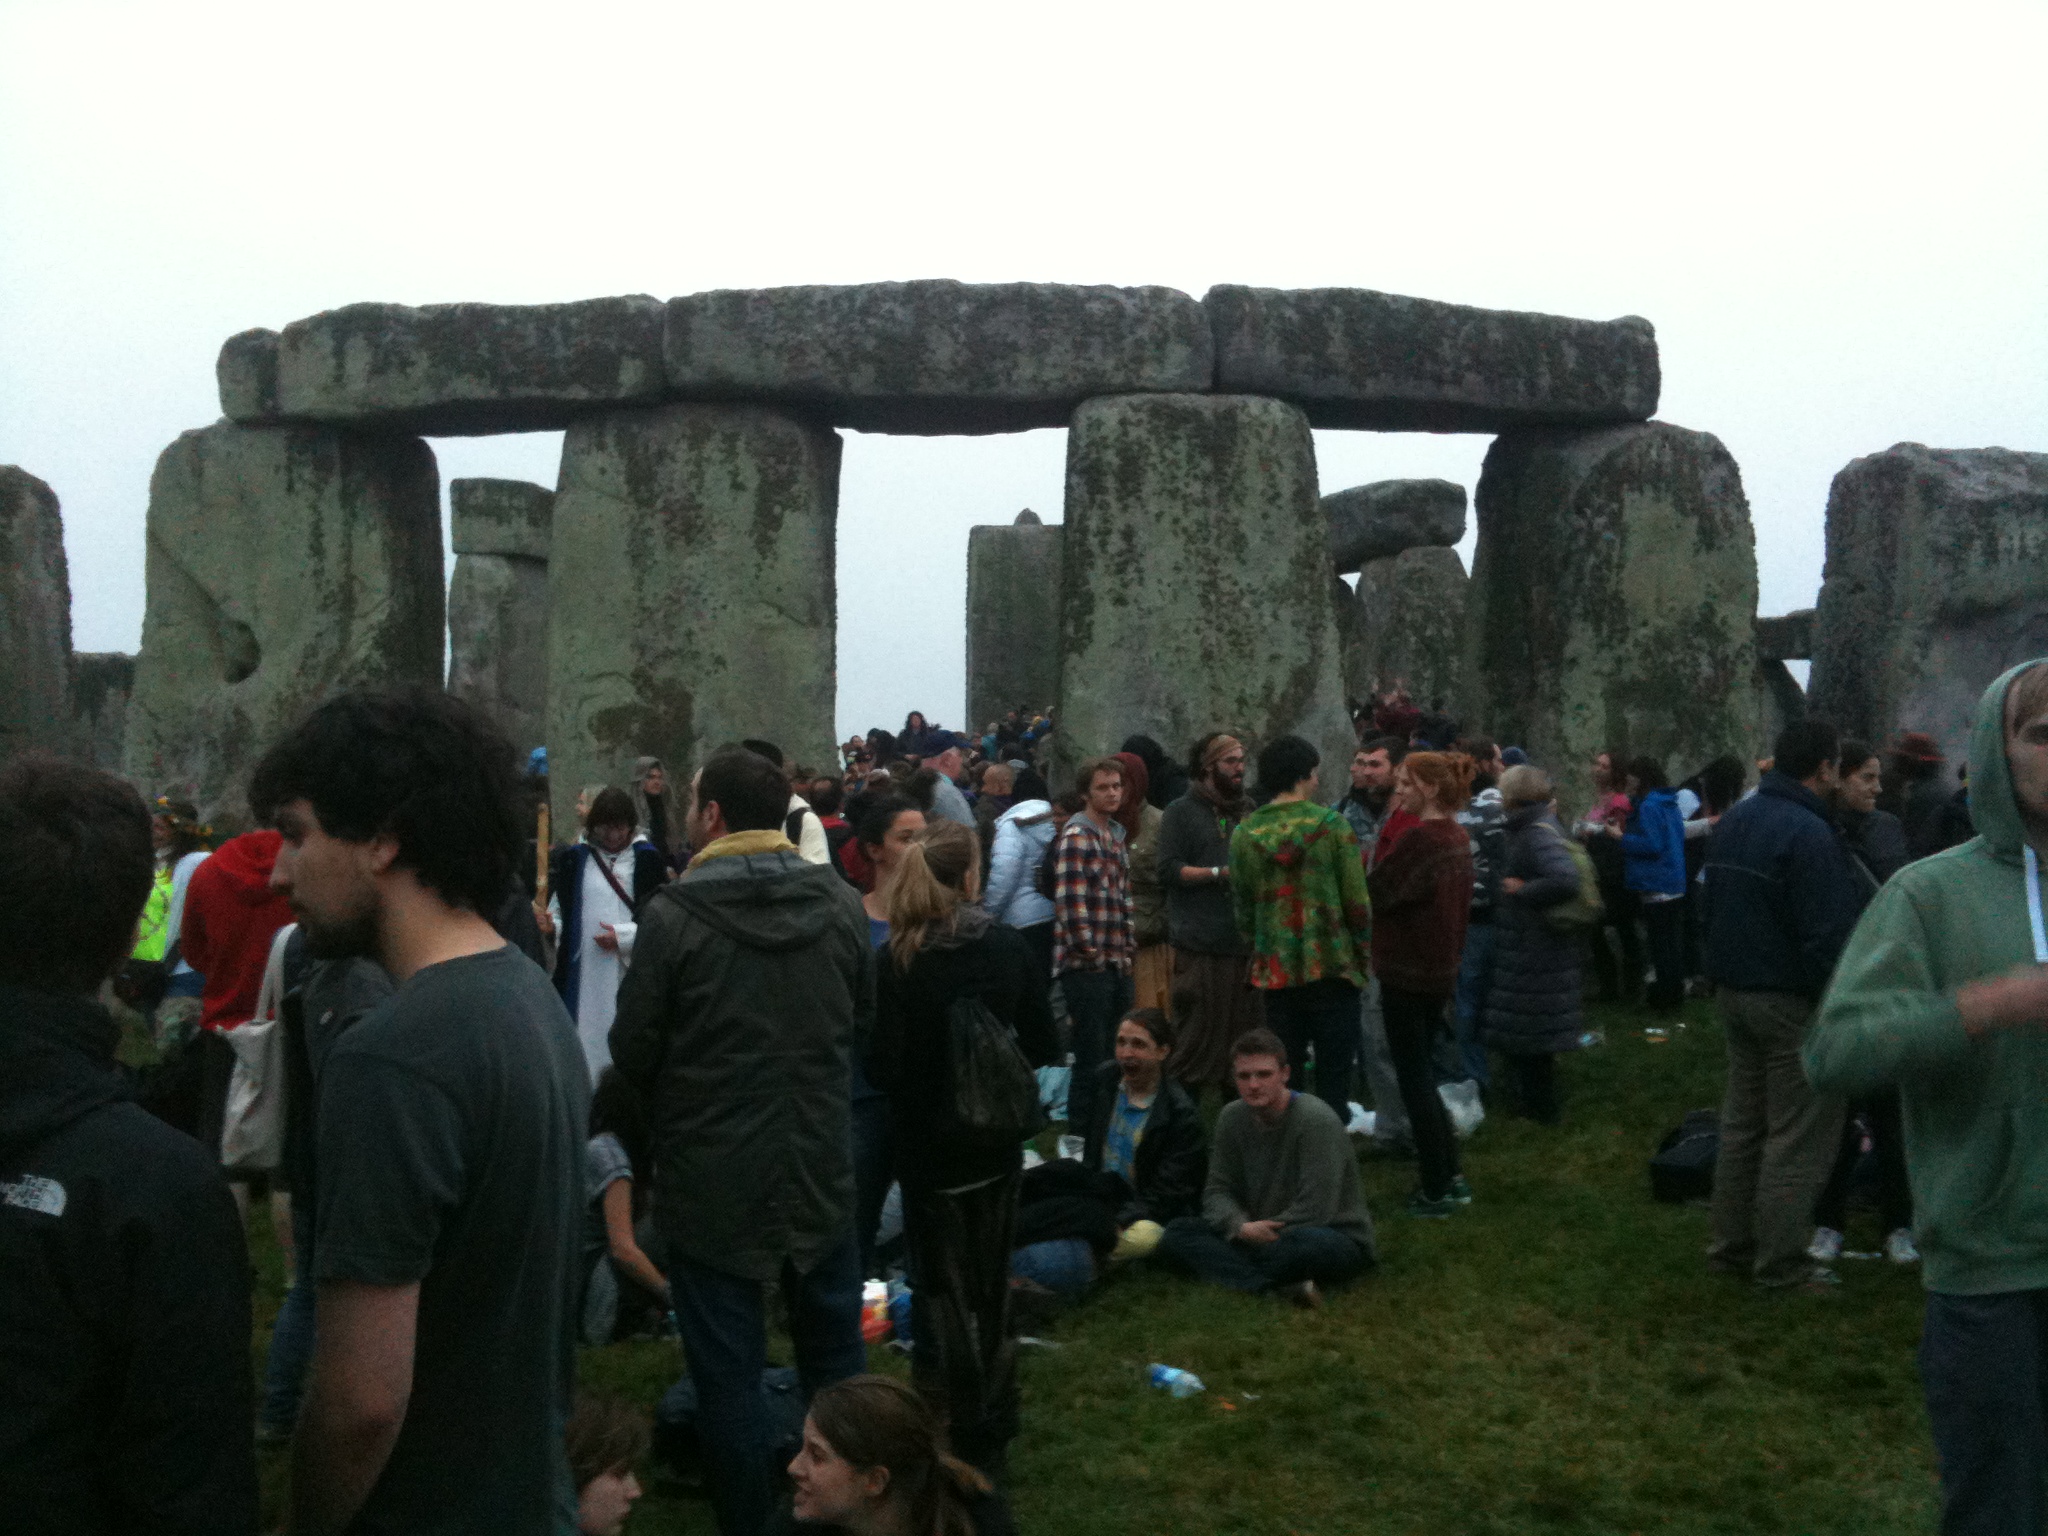 pics/IMG_0146.JPG Stonehenge Solstice Celebration Gathering 2013 photo by Mike Bouckley